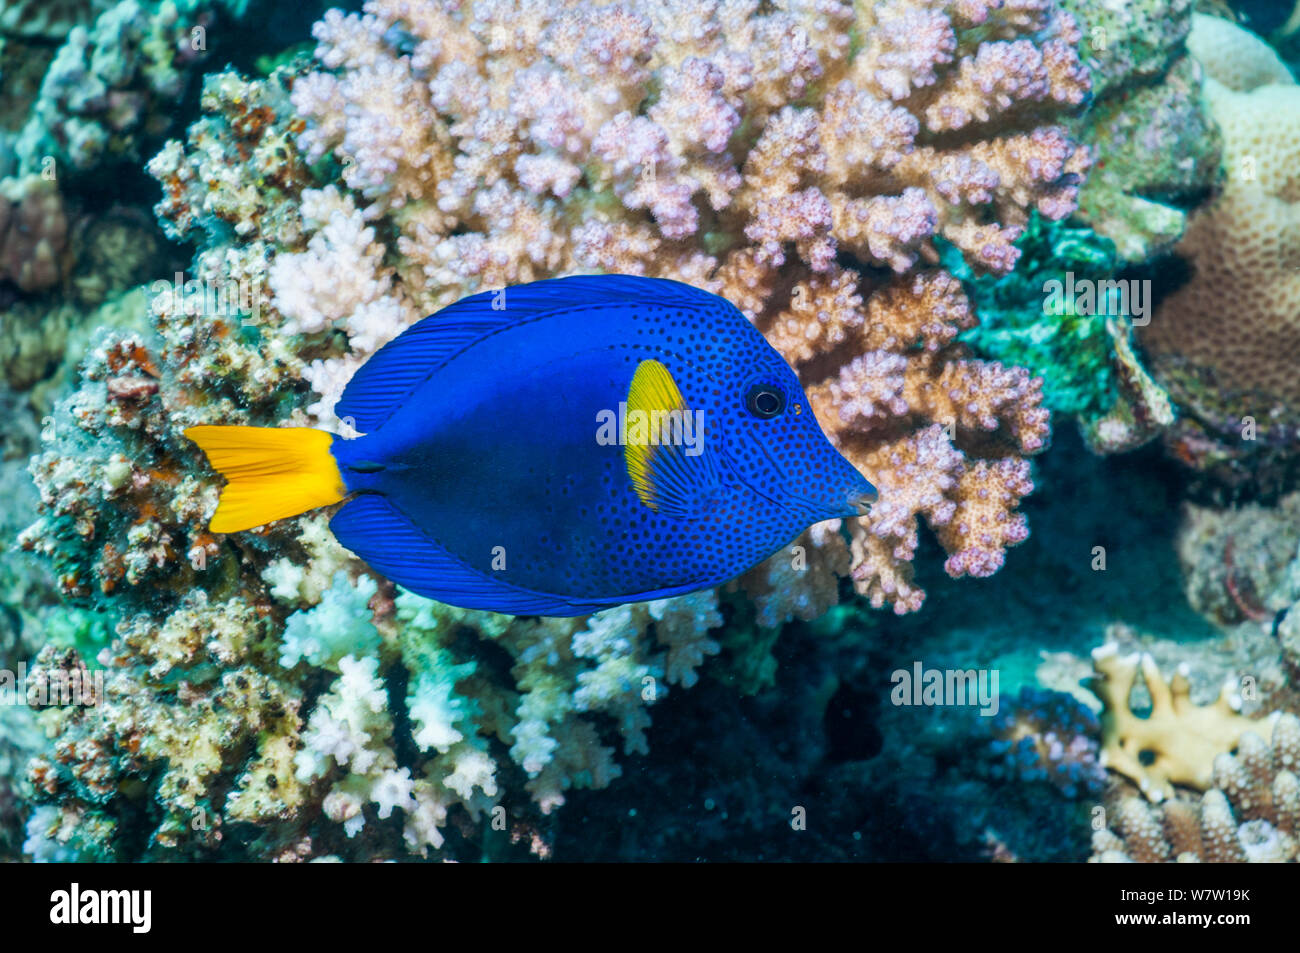 Yellowtail tang or surgeonfish (Zebrasoma xanthurum)  Egypt, Red Sea. Stock Photo